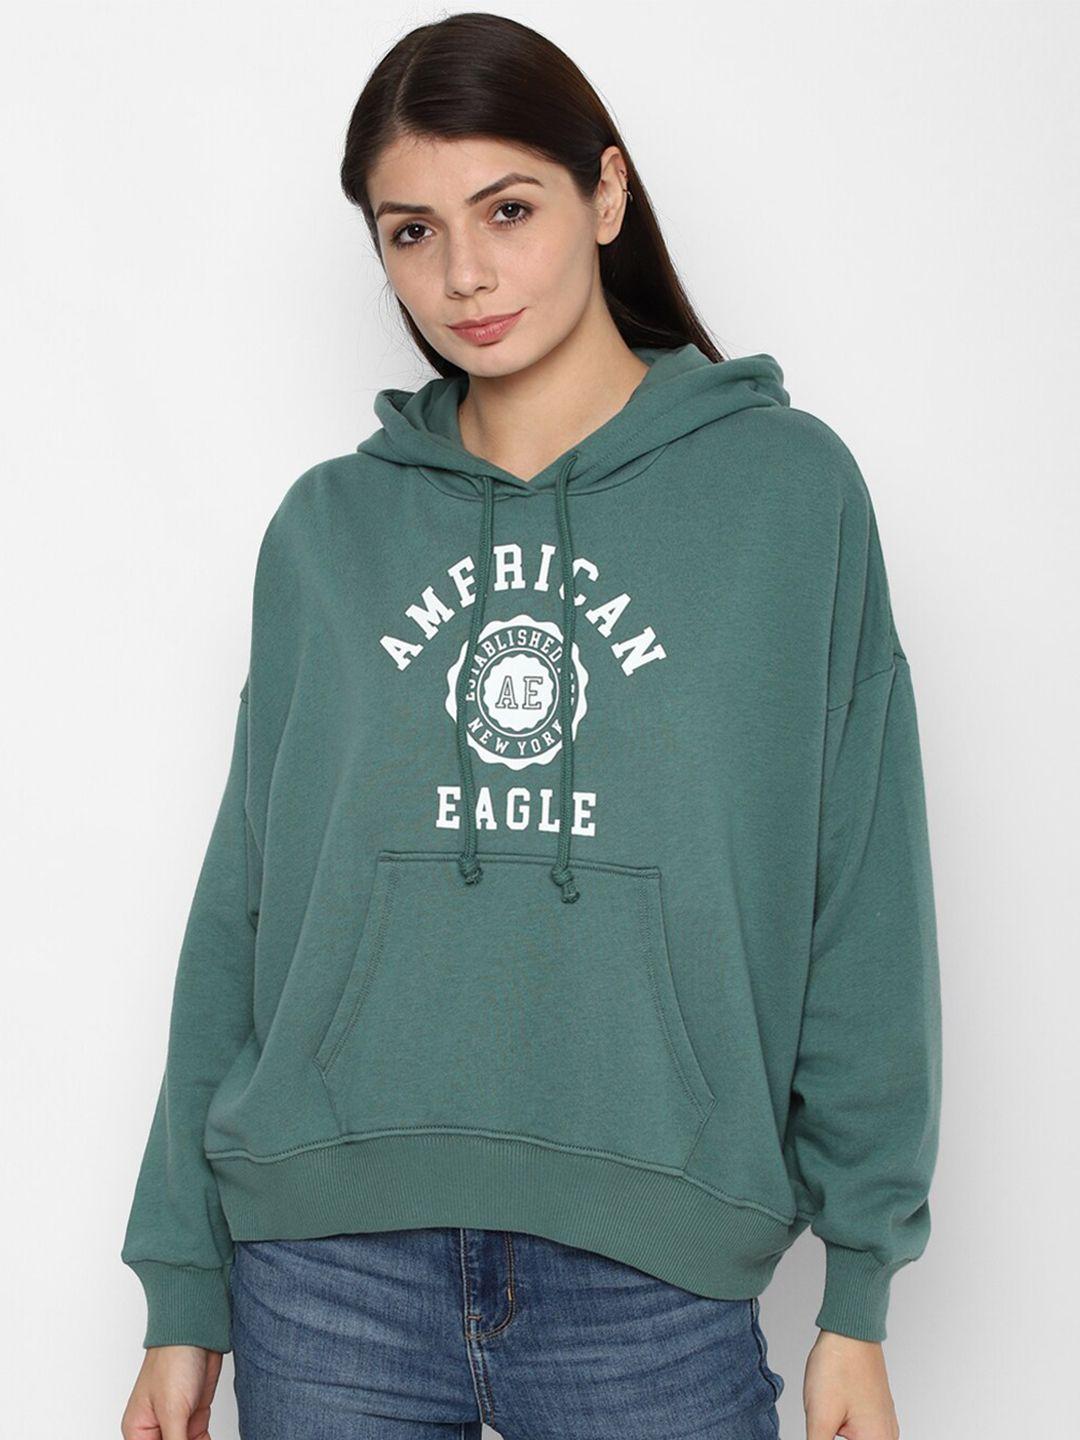 american eagle outfitters women green printed hooded sweatshirt